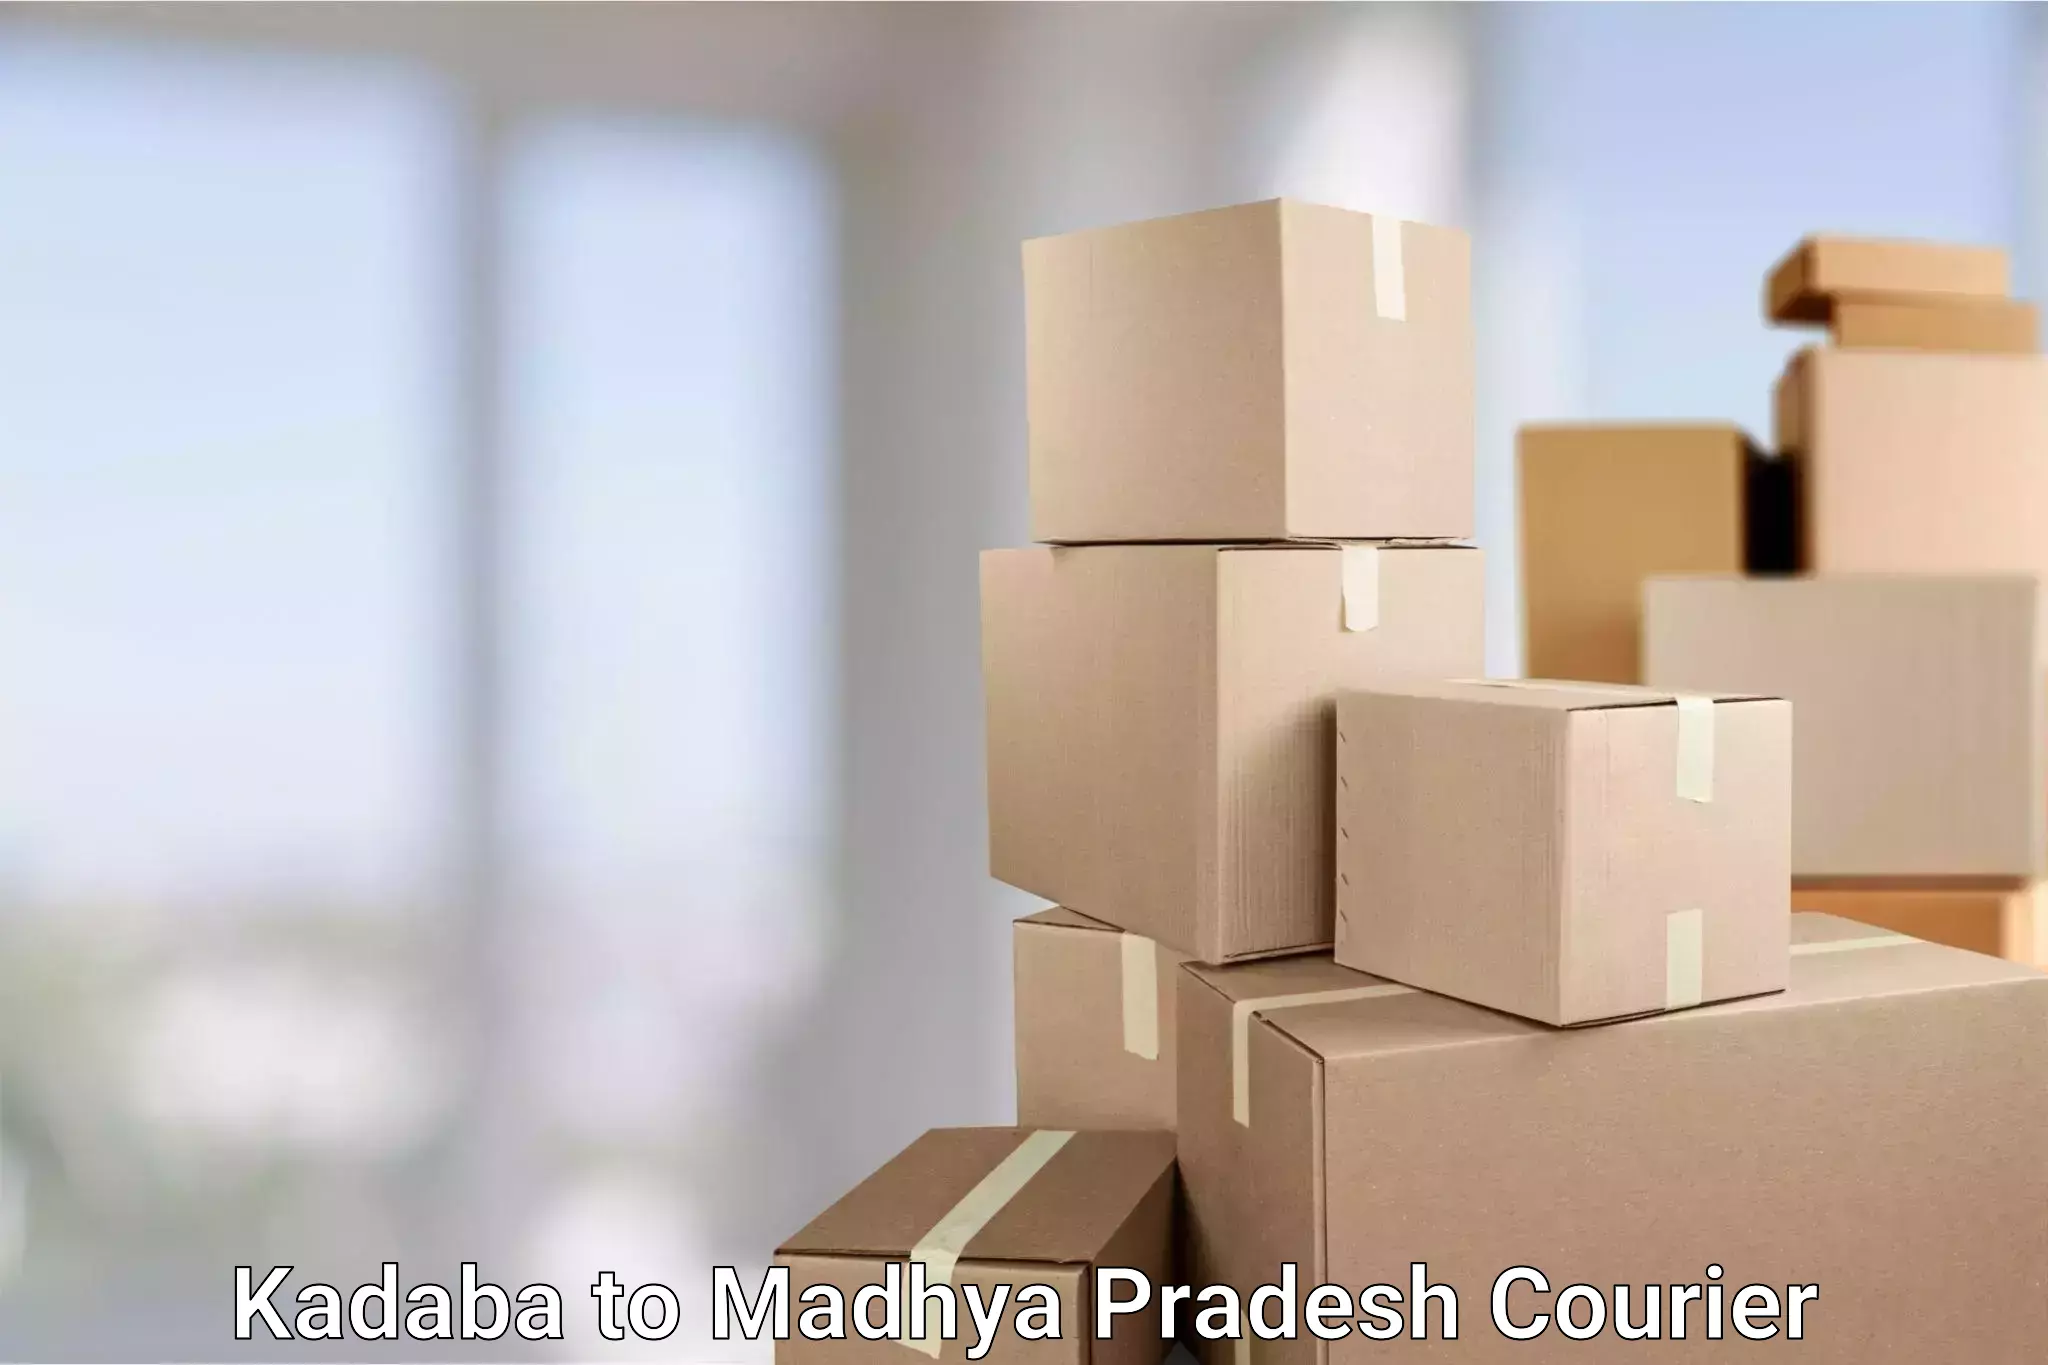 Lightweight parcel options Kadaba to Tikamgarh